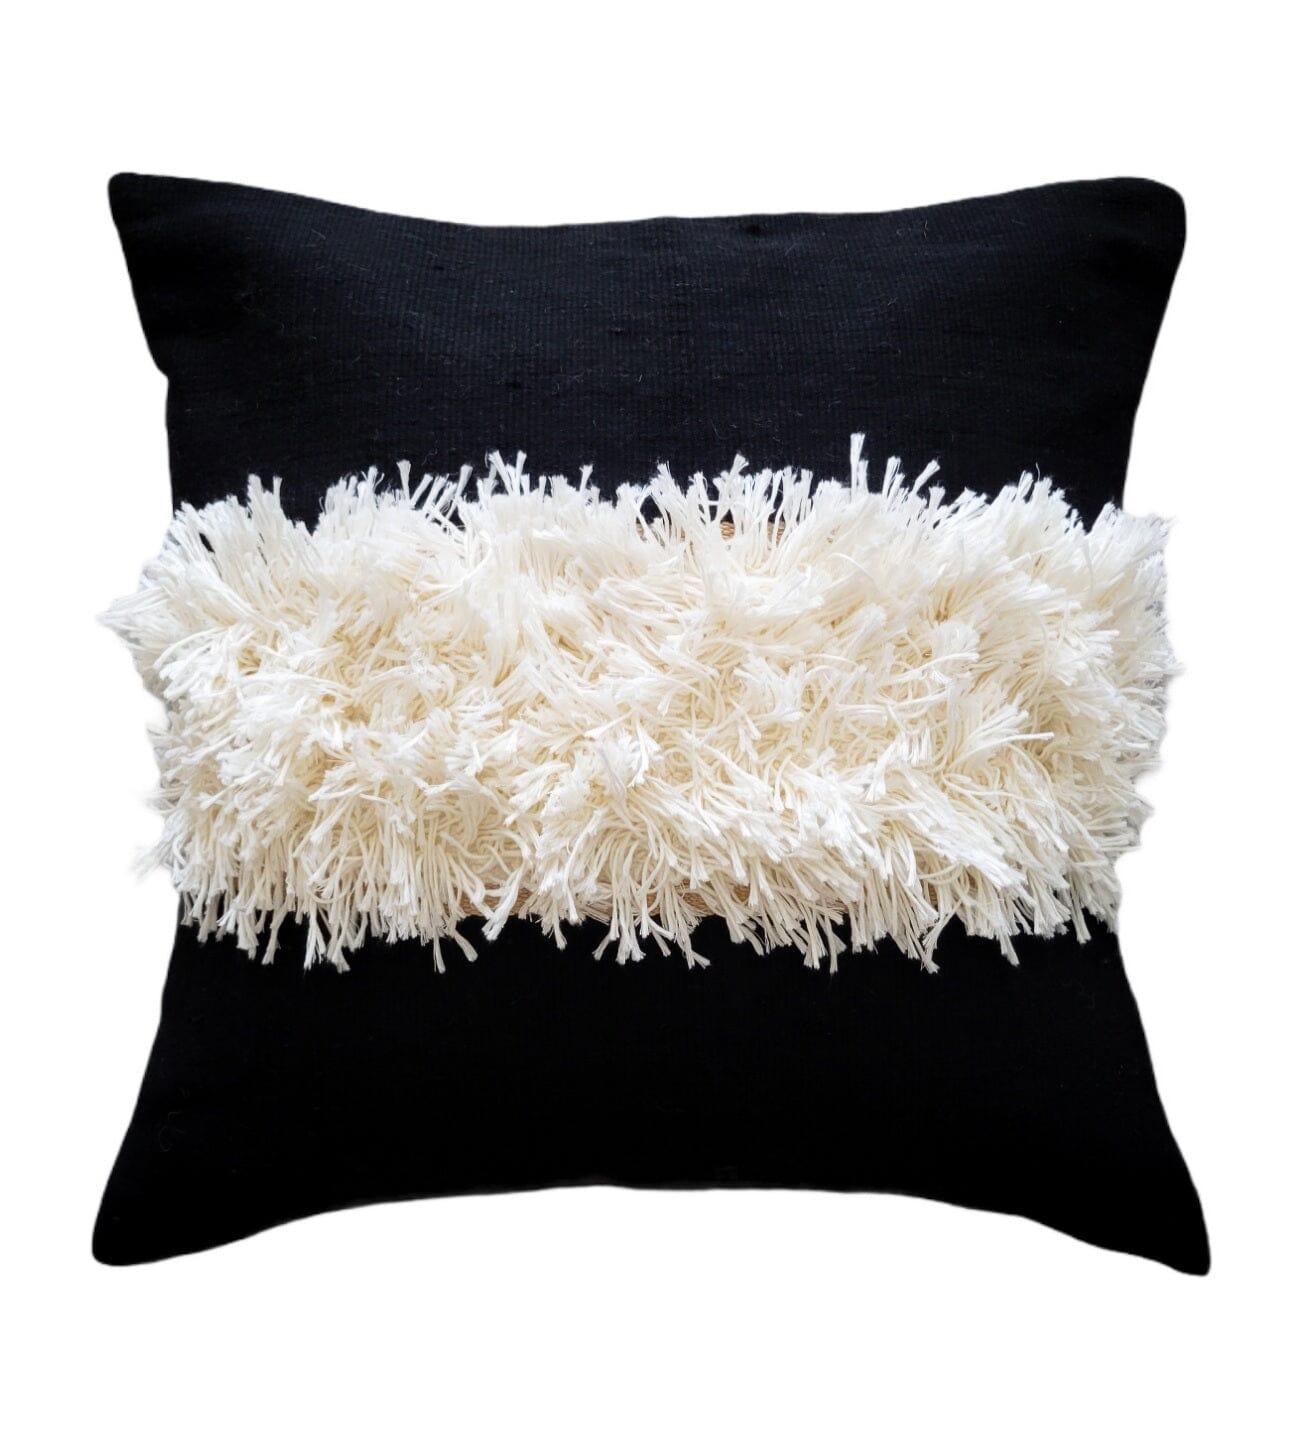 Egyptian Riya Handwoven Cotton Decorative Throw Pillow Cover For Sale